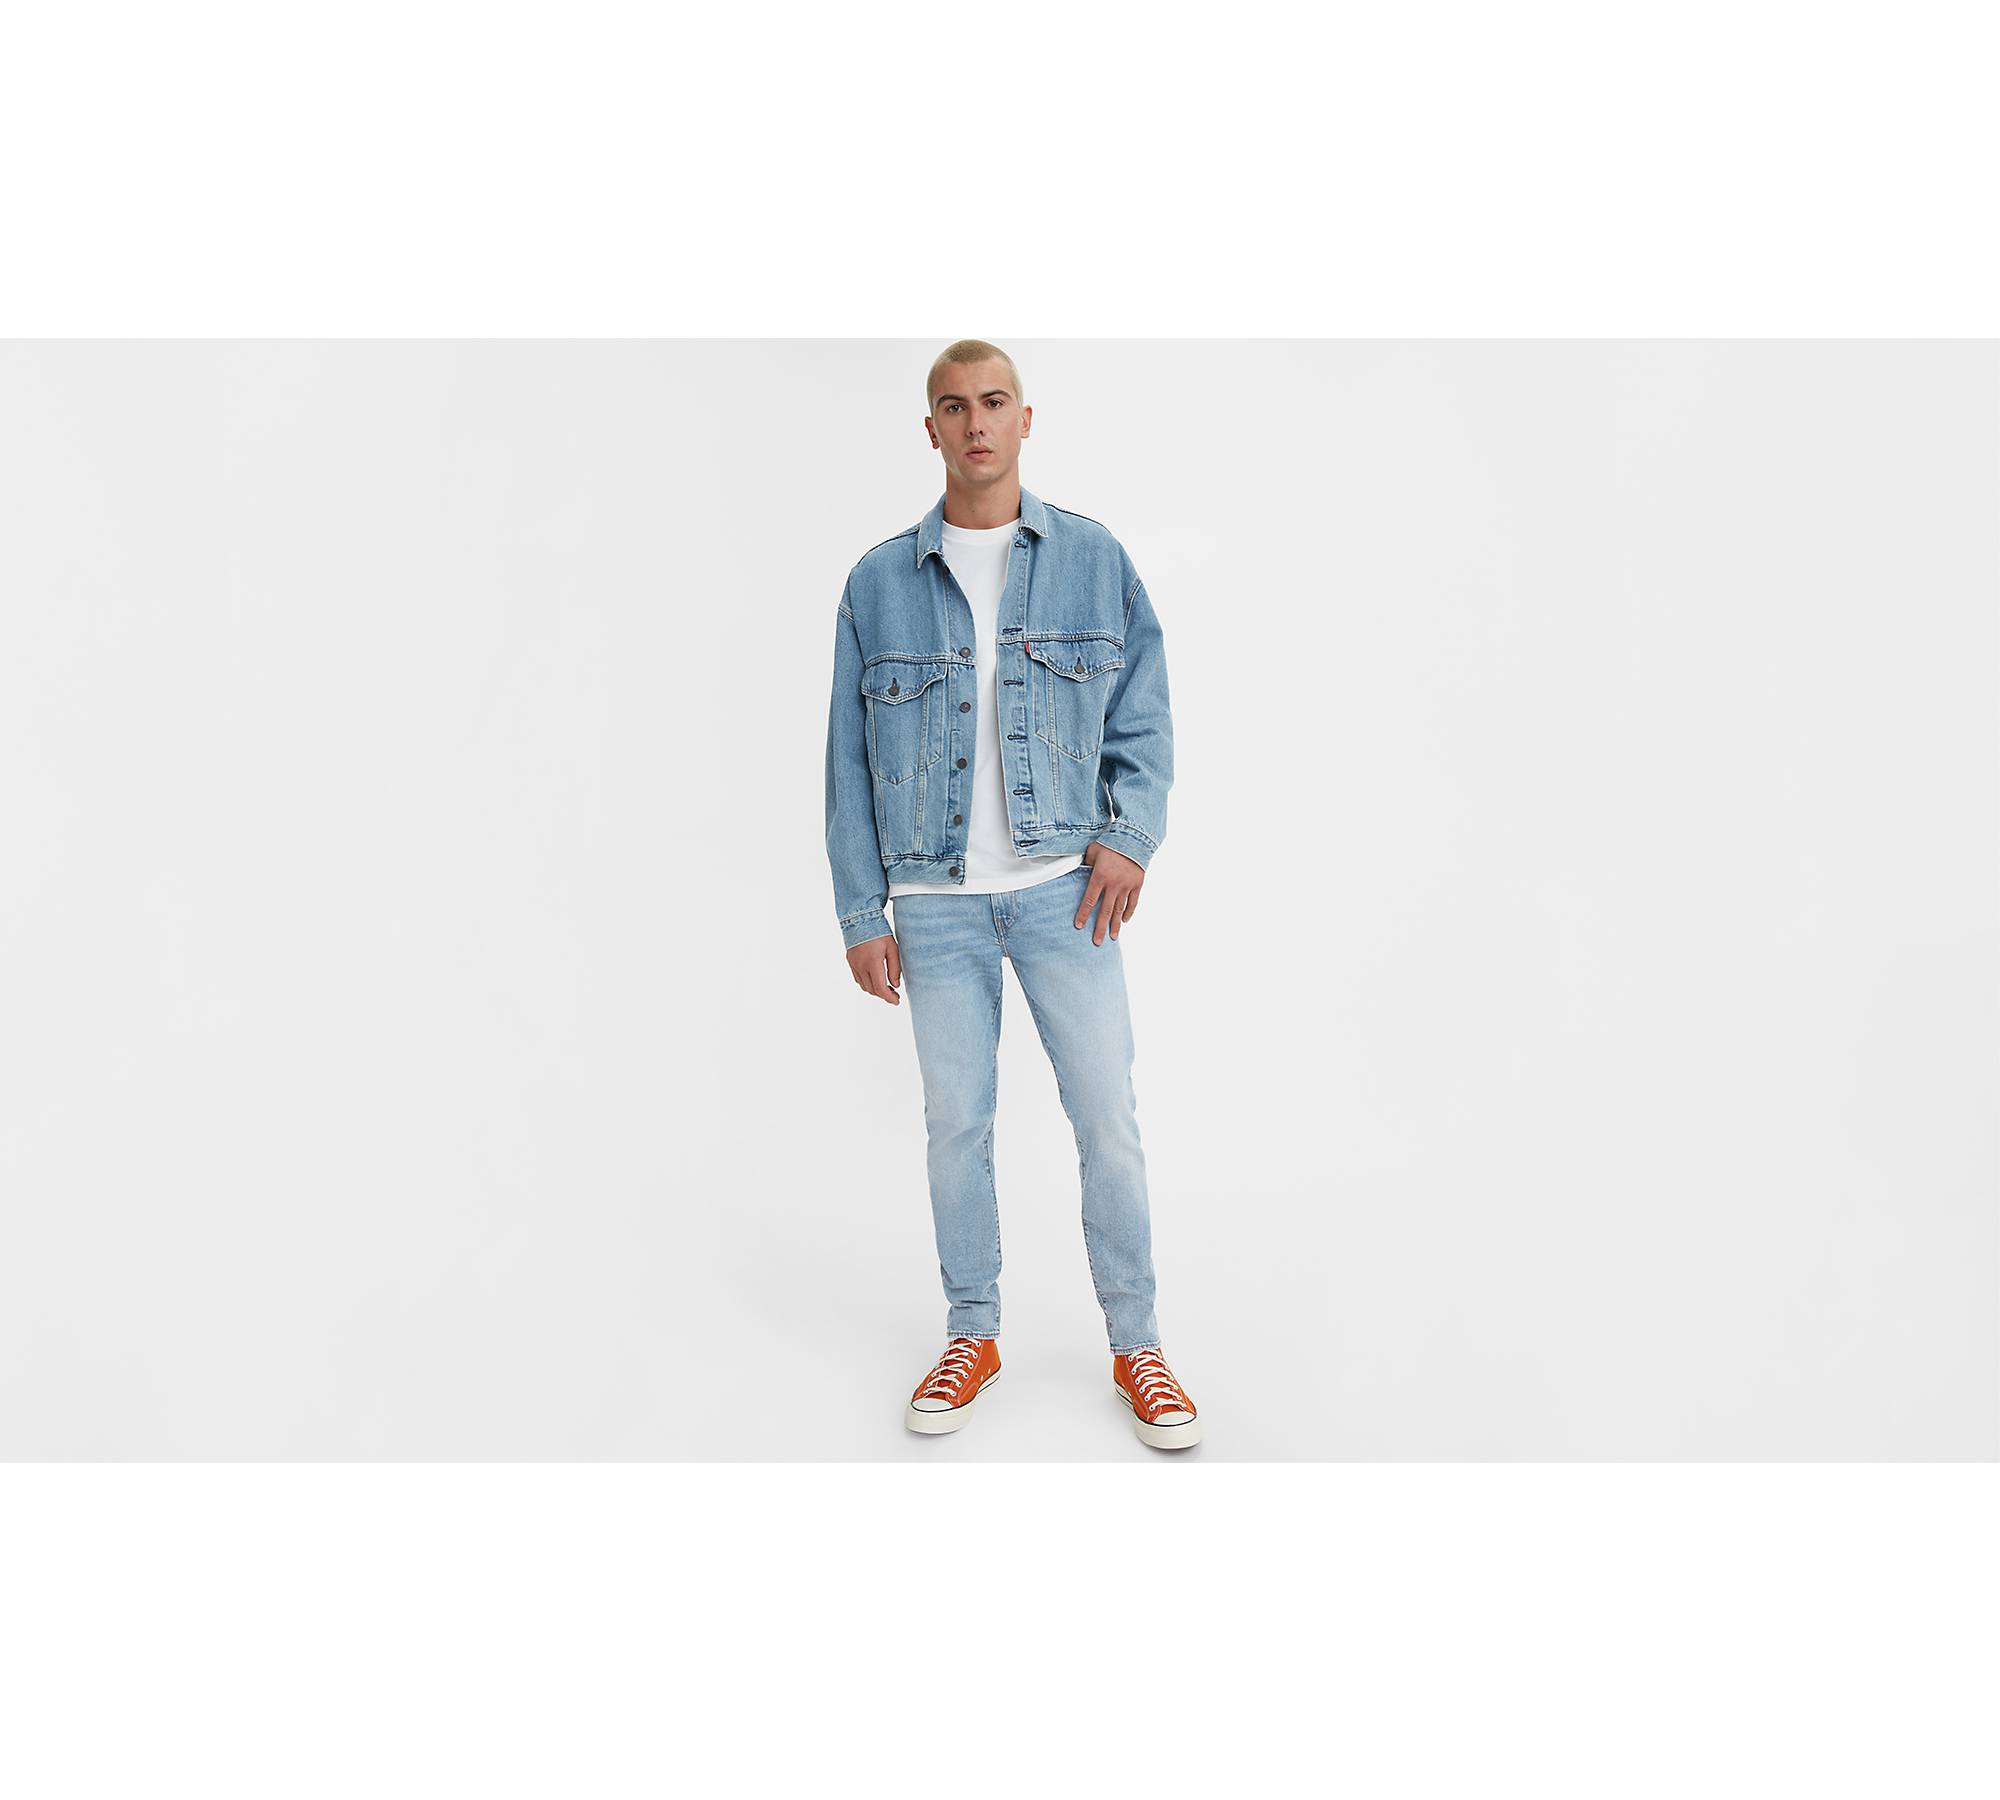 512™ Slim Taper Levi's® Flex Men's Jeans 1